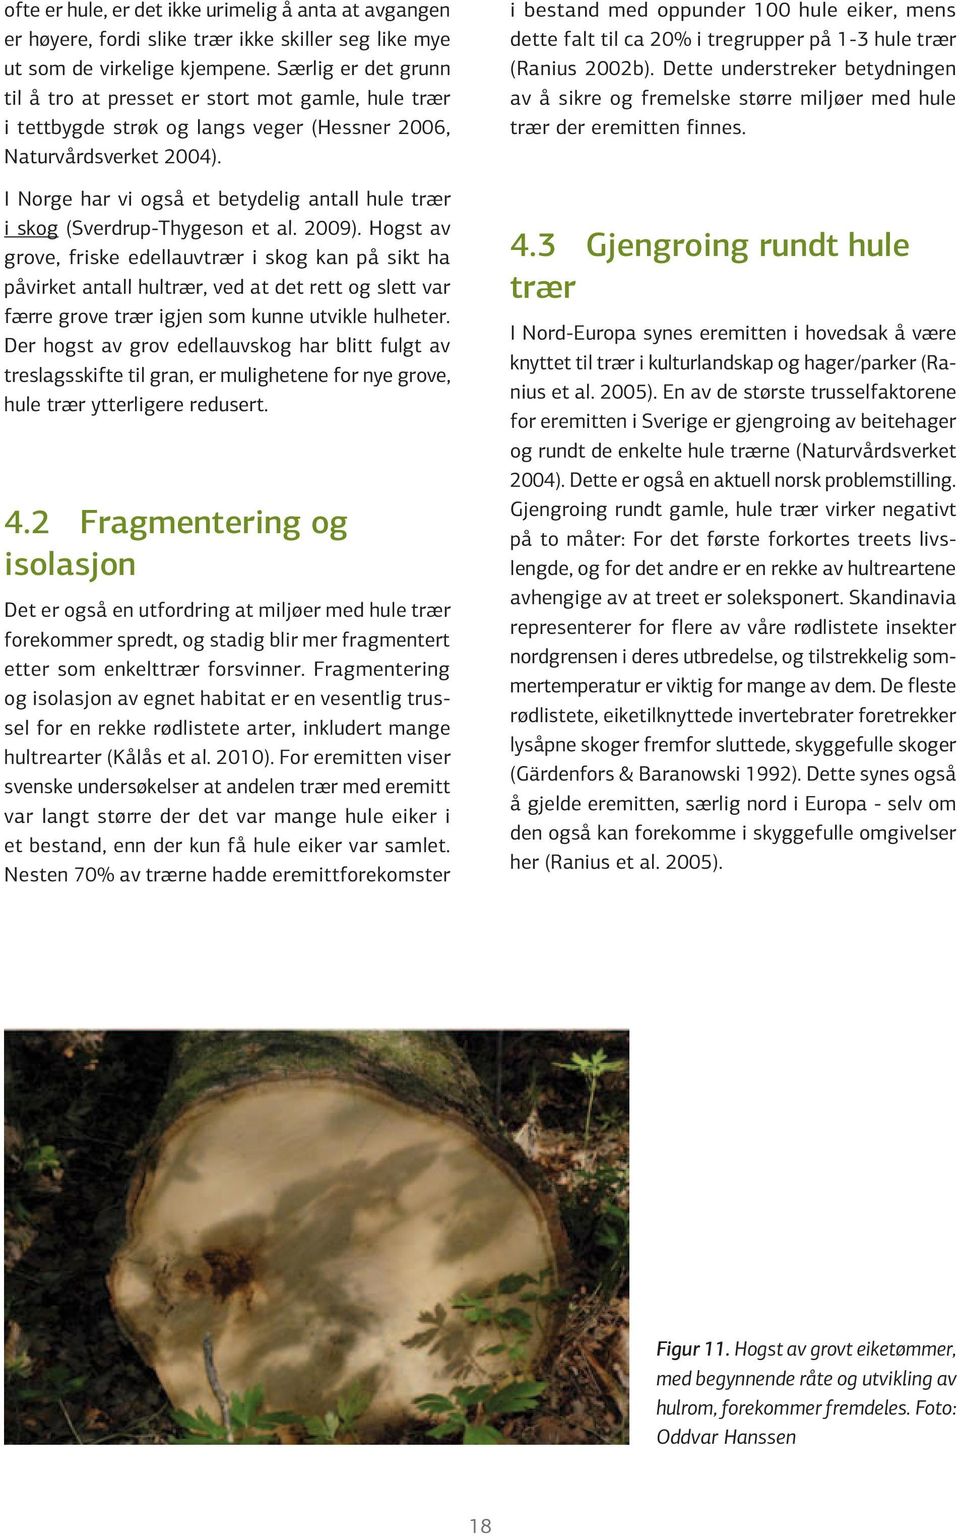 I Norge har vi også et betydelig antall hule trær i skog (Sverdrup-Thygeson et al. 2009).